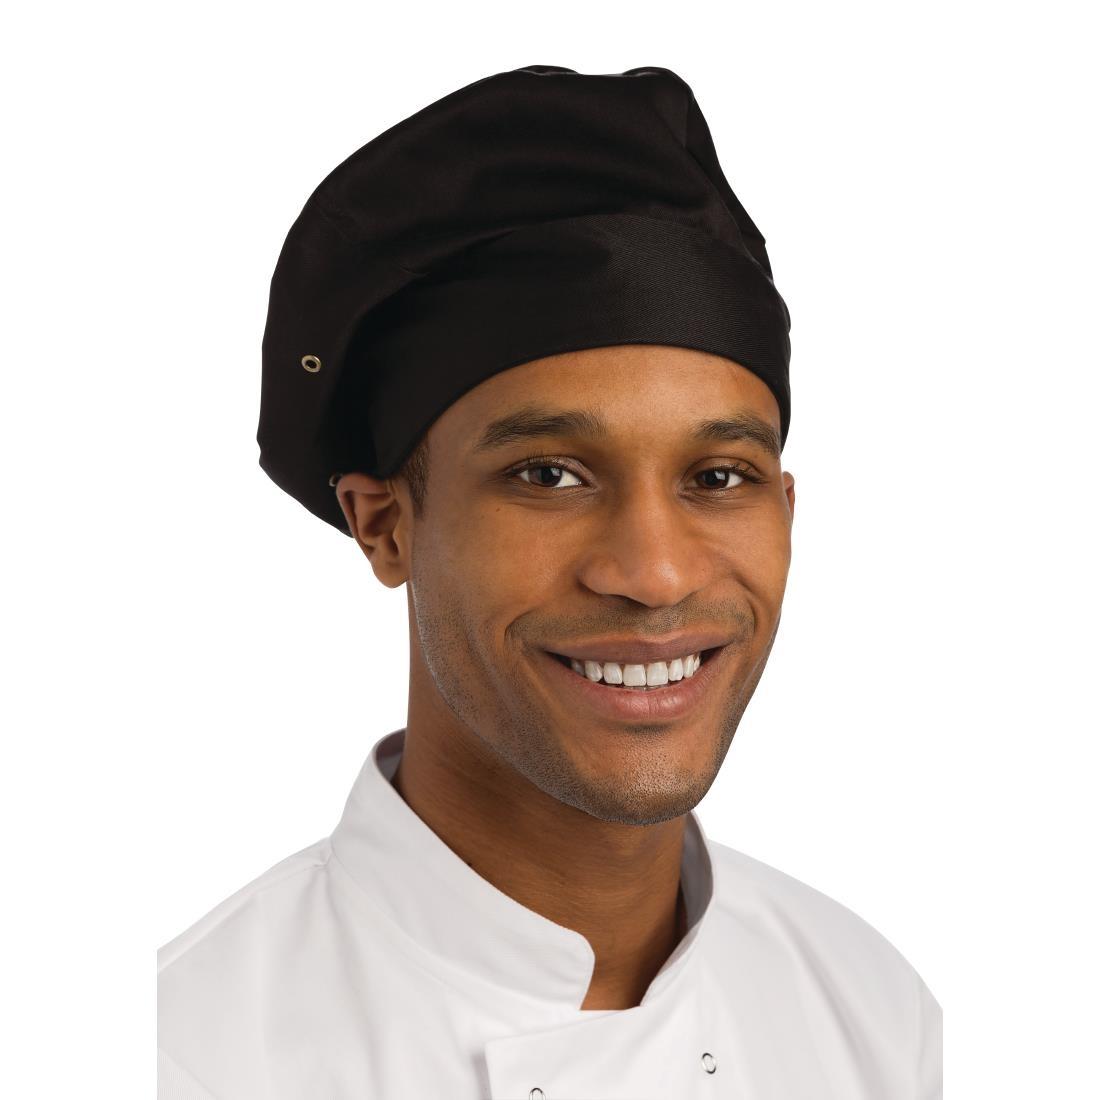 Chef Works Toque Chefs Hat Black - A962  - 1